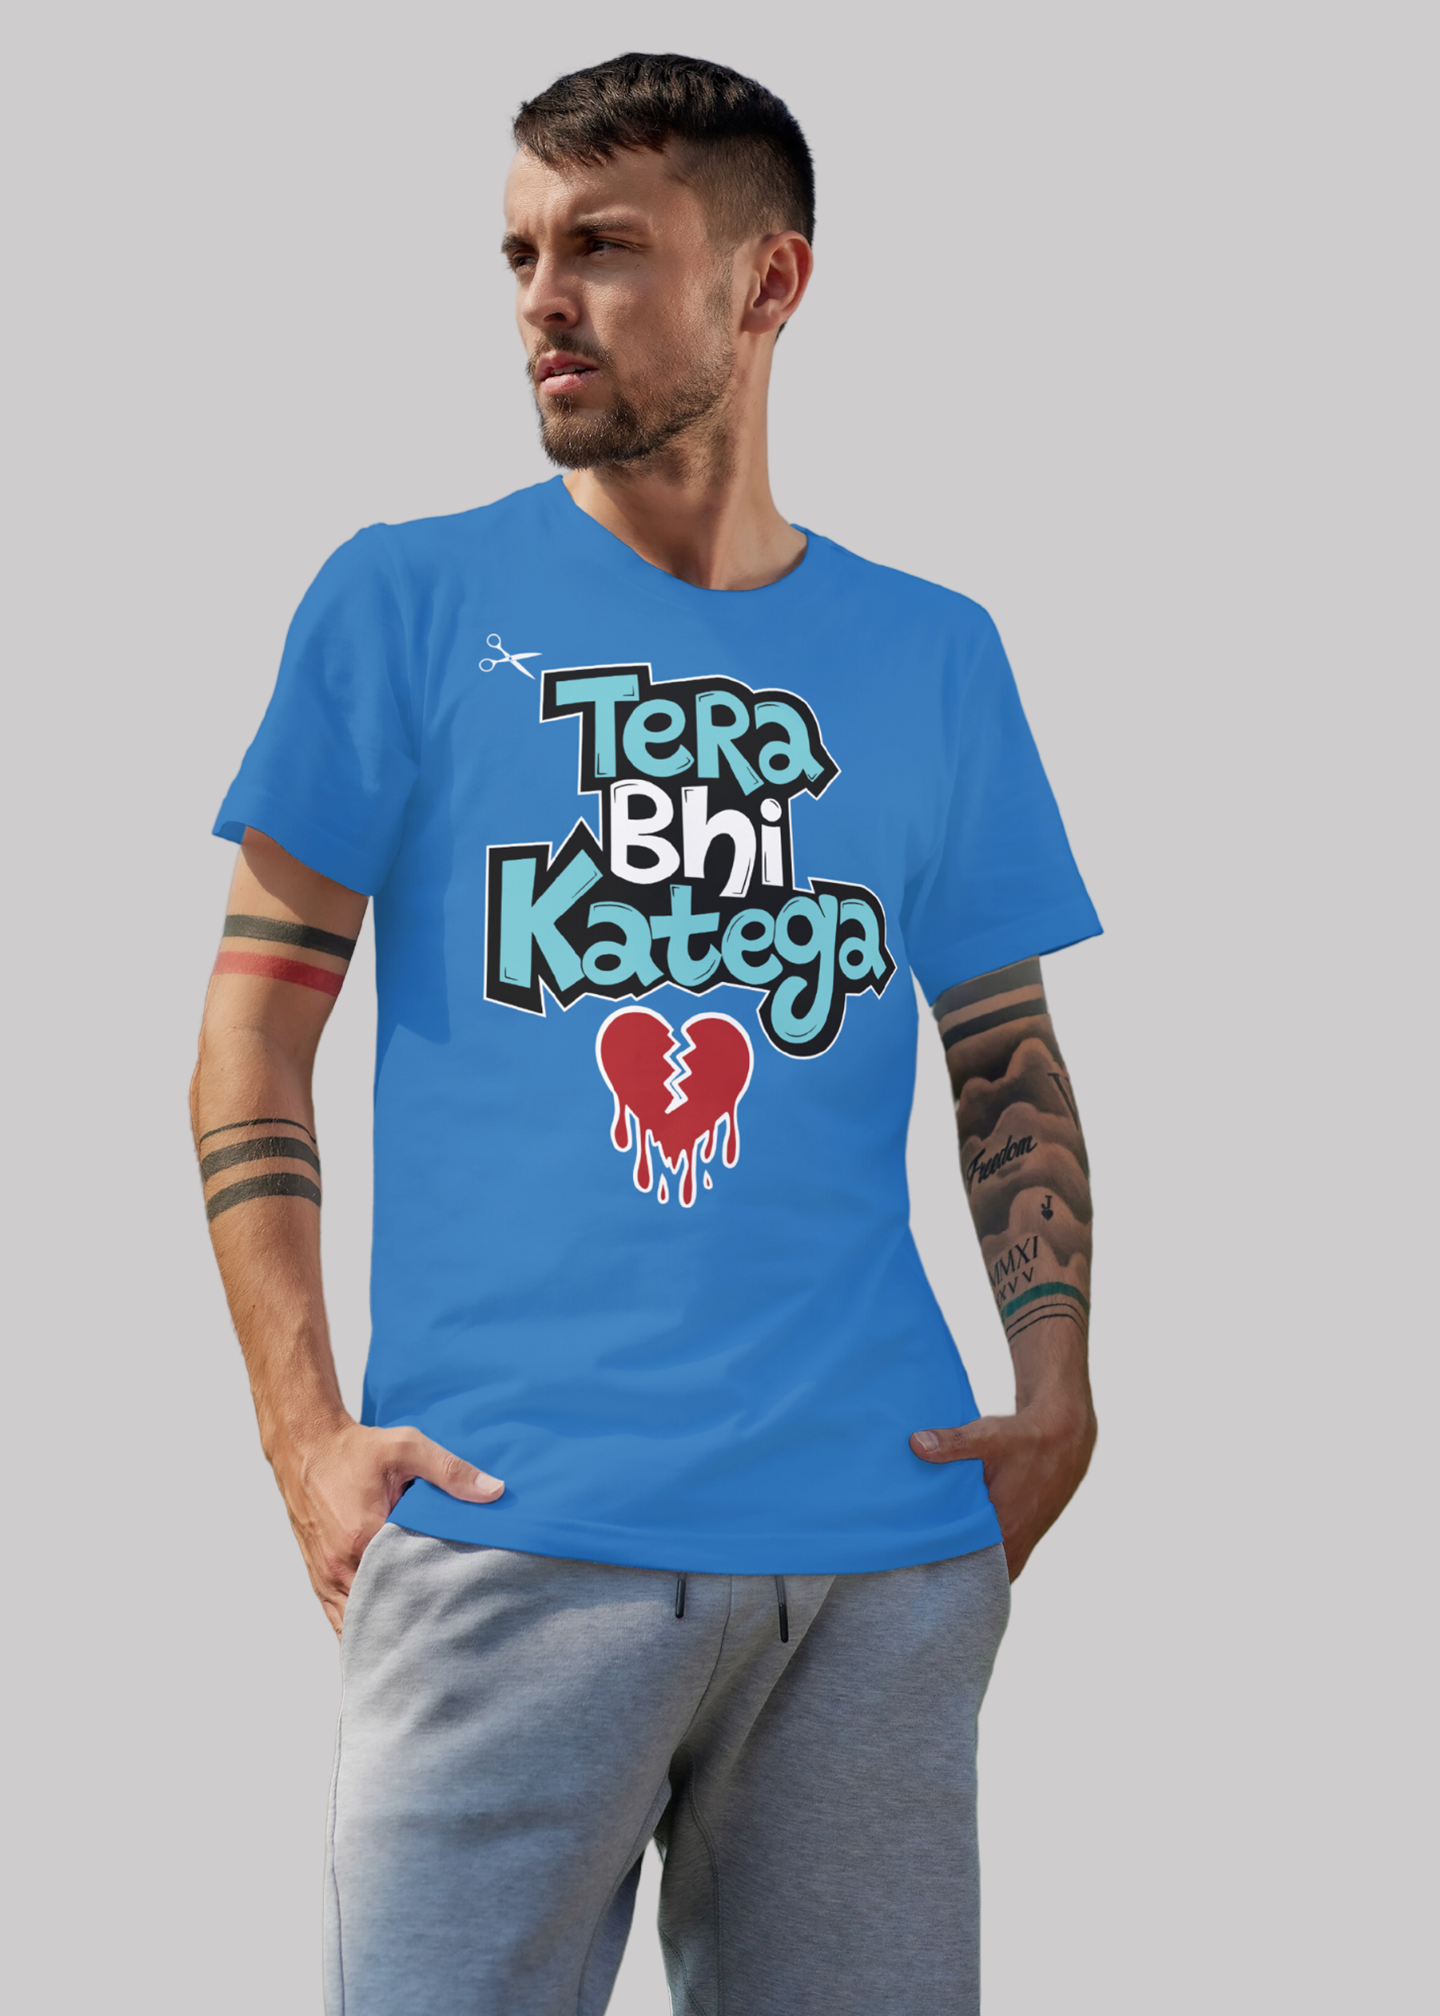 Tera bhi katega Printed Half Sleeve Premium Cotton T-shirt For Men